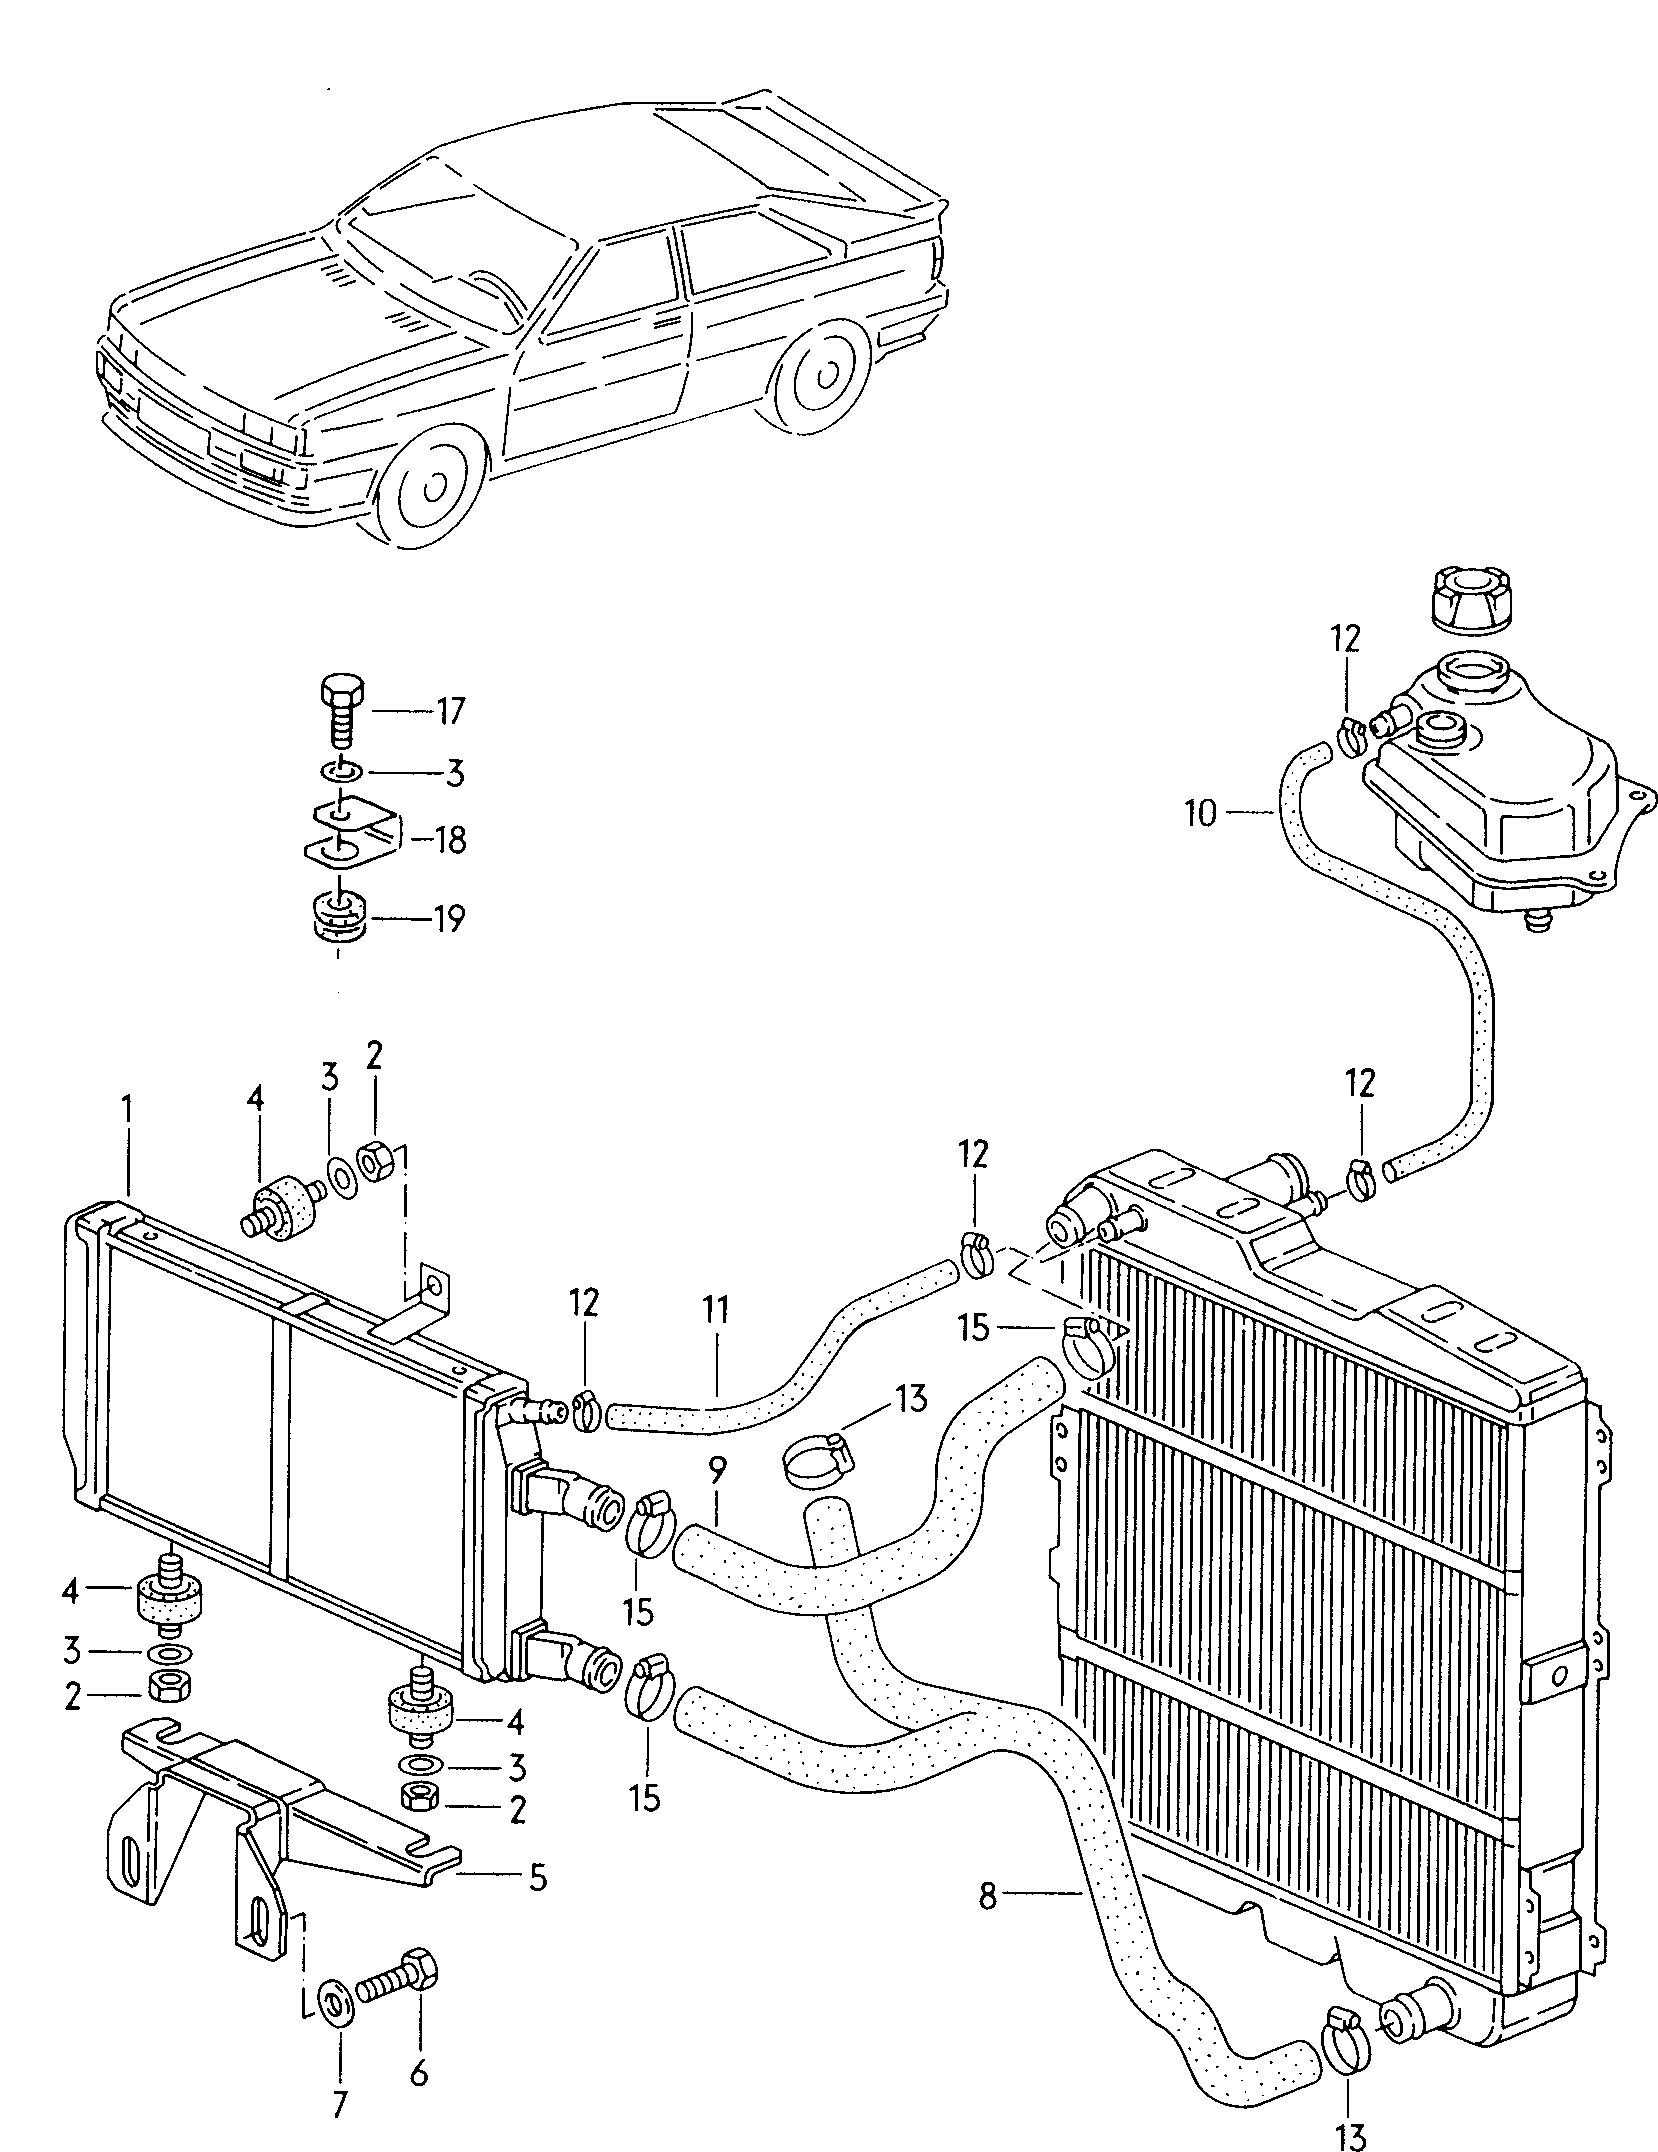 additional cooler for coolant; coolant hose - Audi quattro/Sport(AQS)  